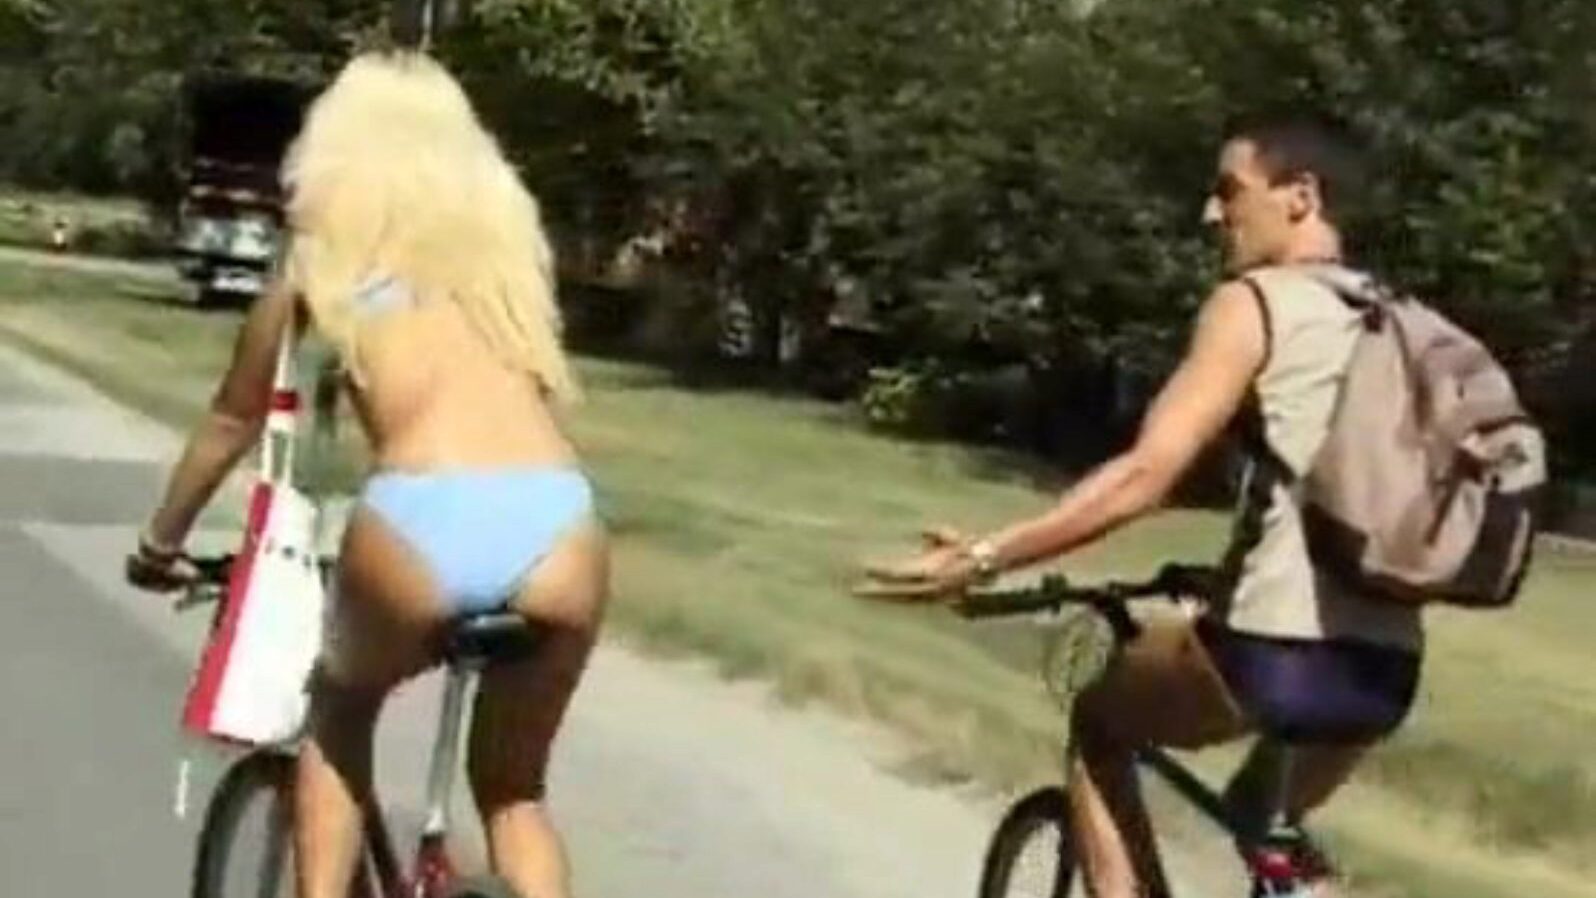 Gina Blue was riding her bike